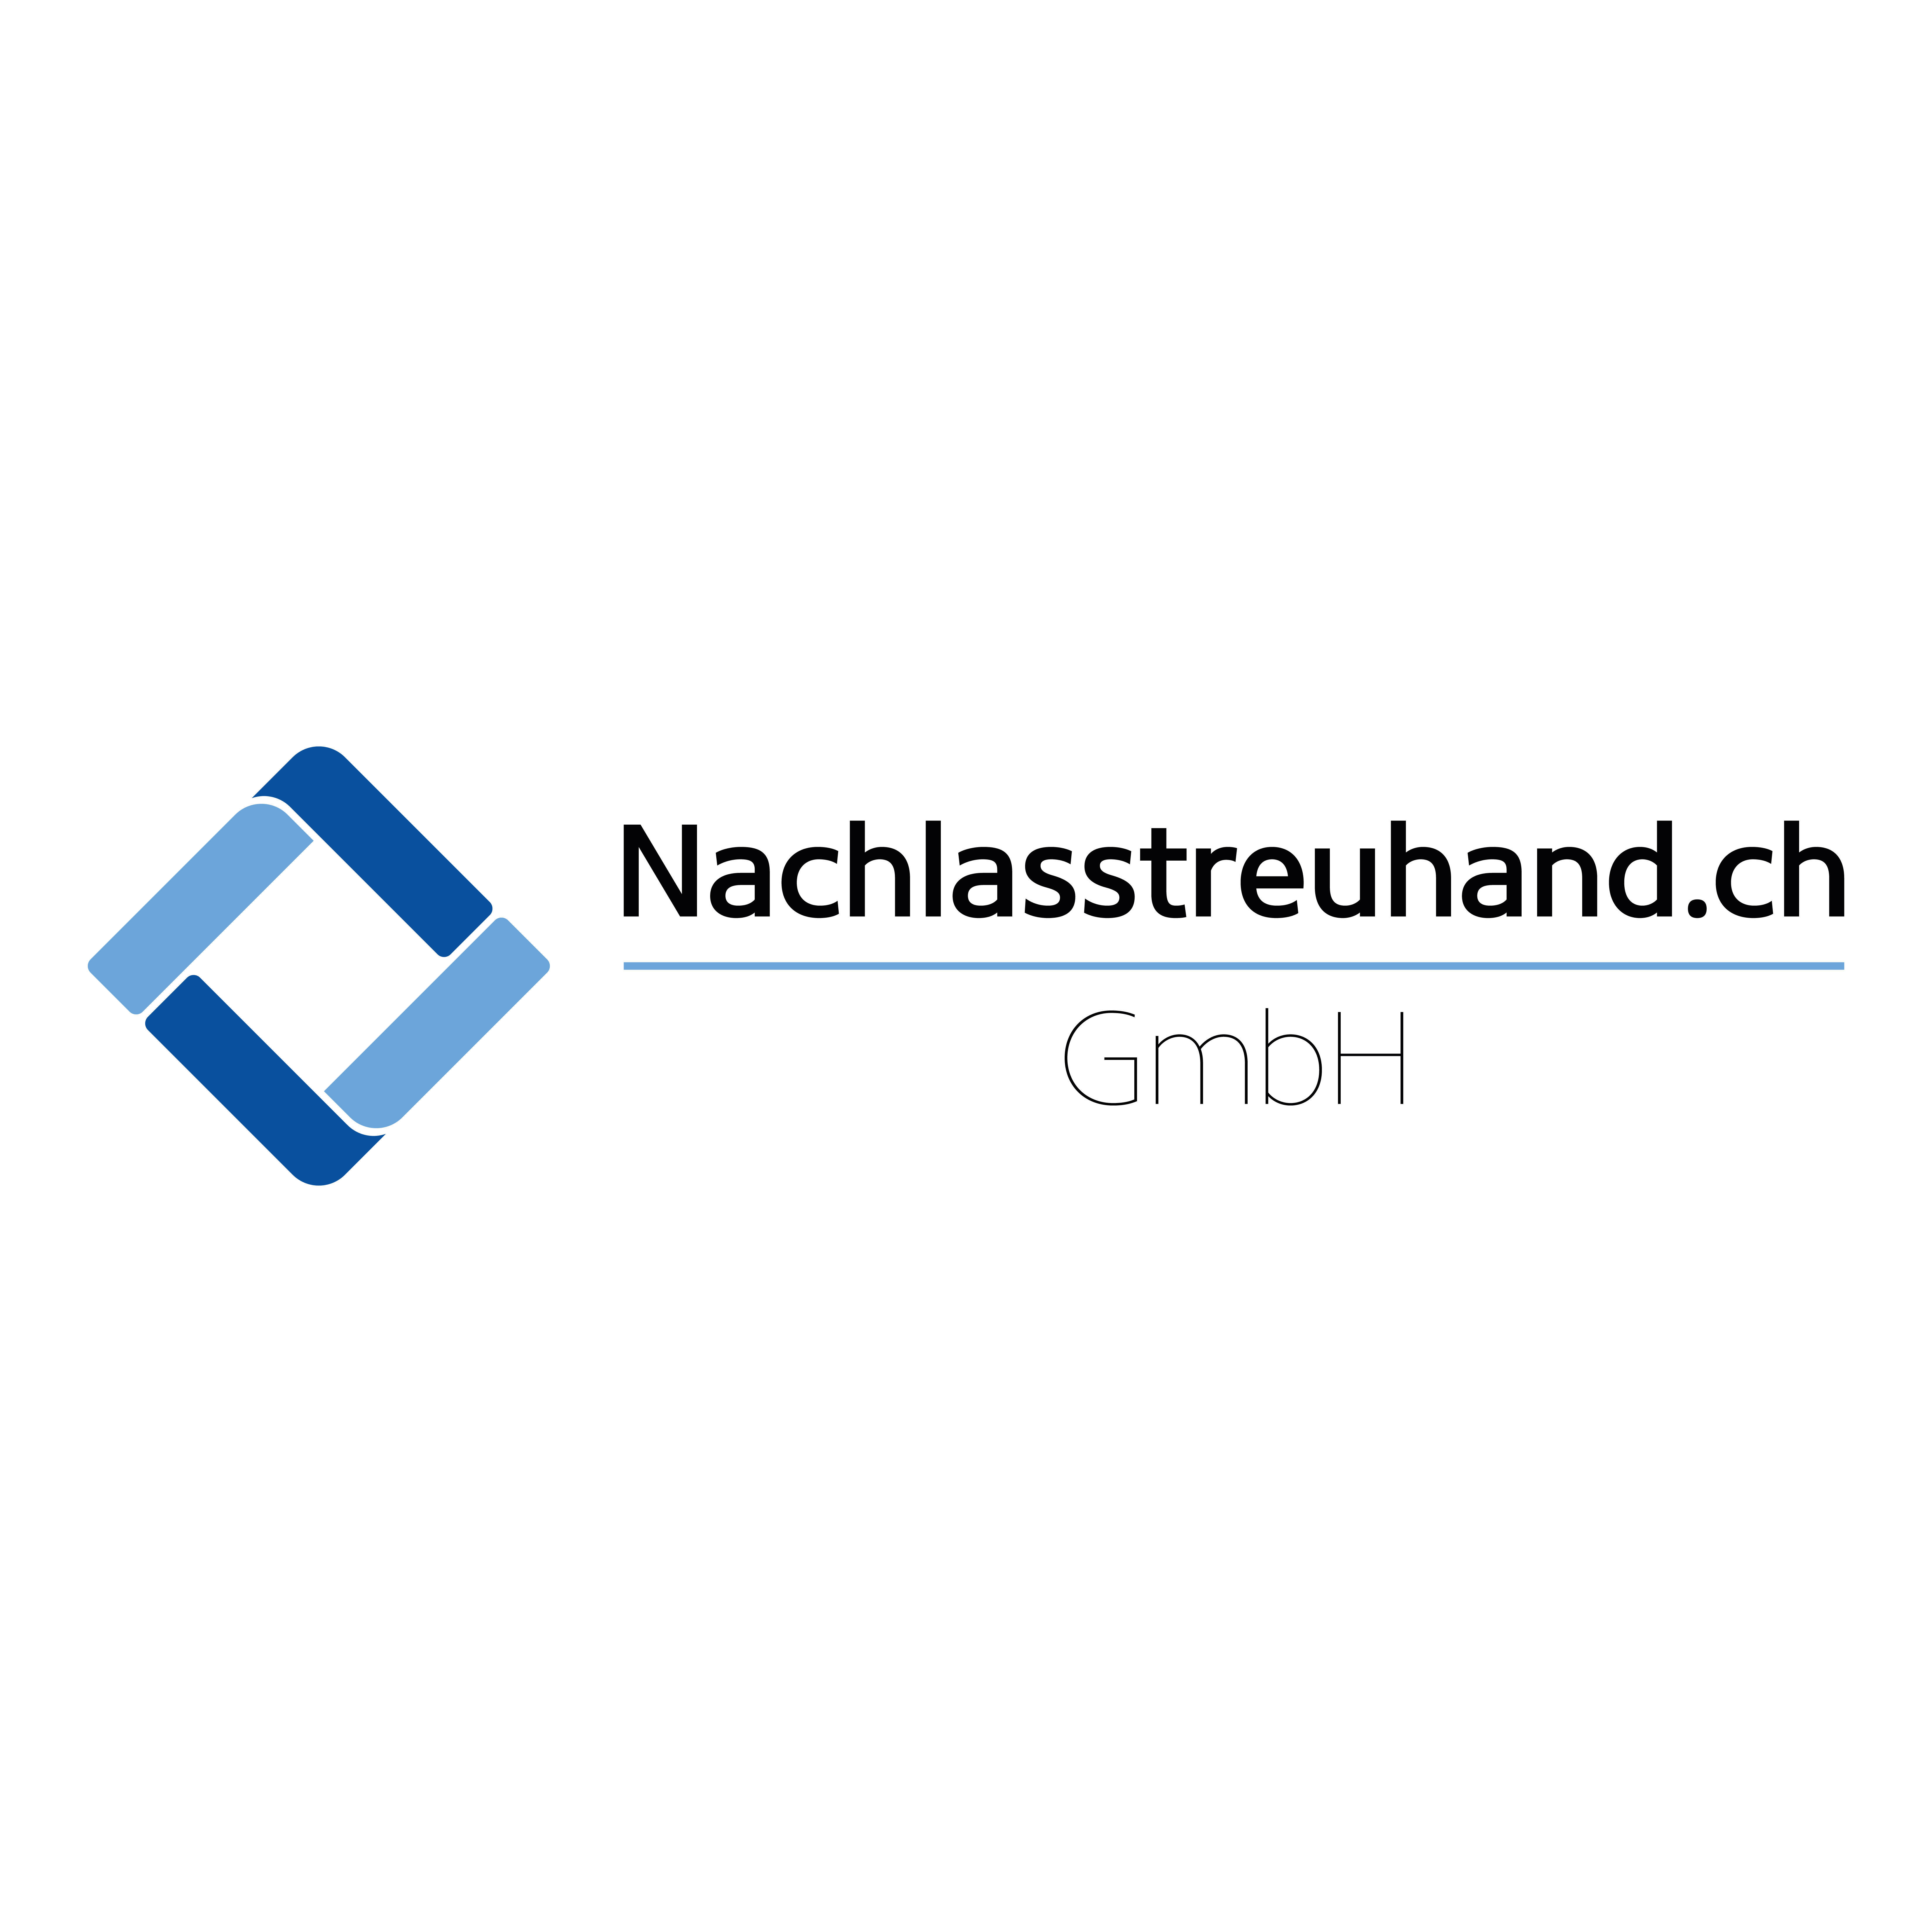 Nachlasstreuhand.ch GmbH Logo